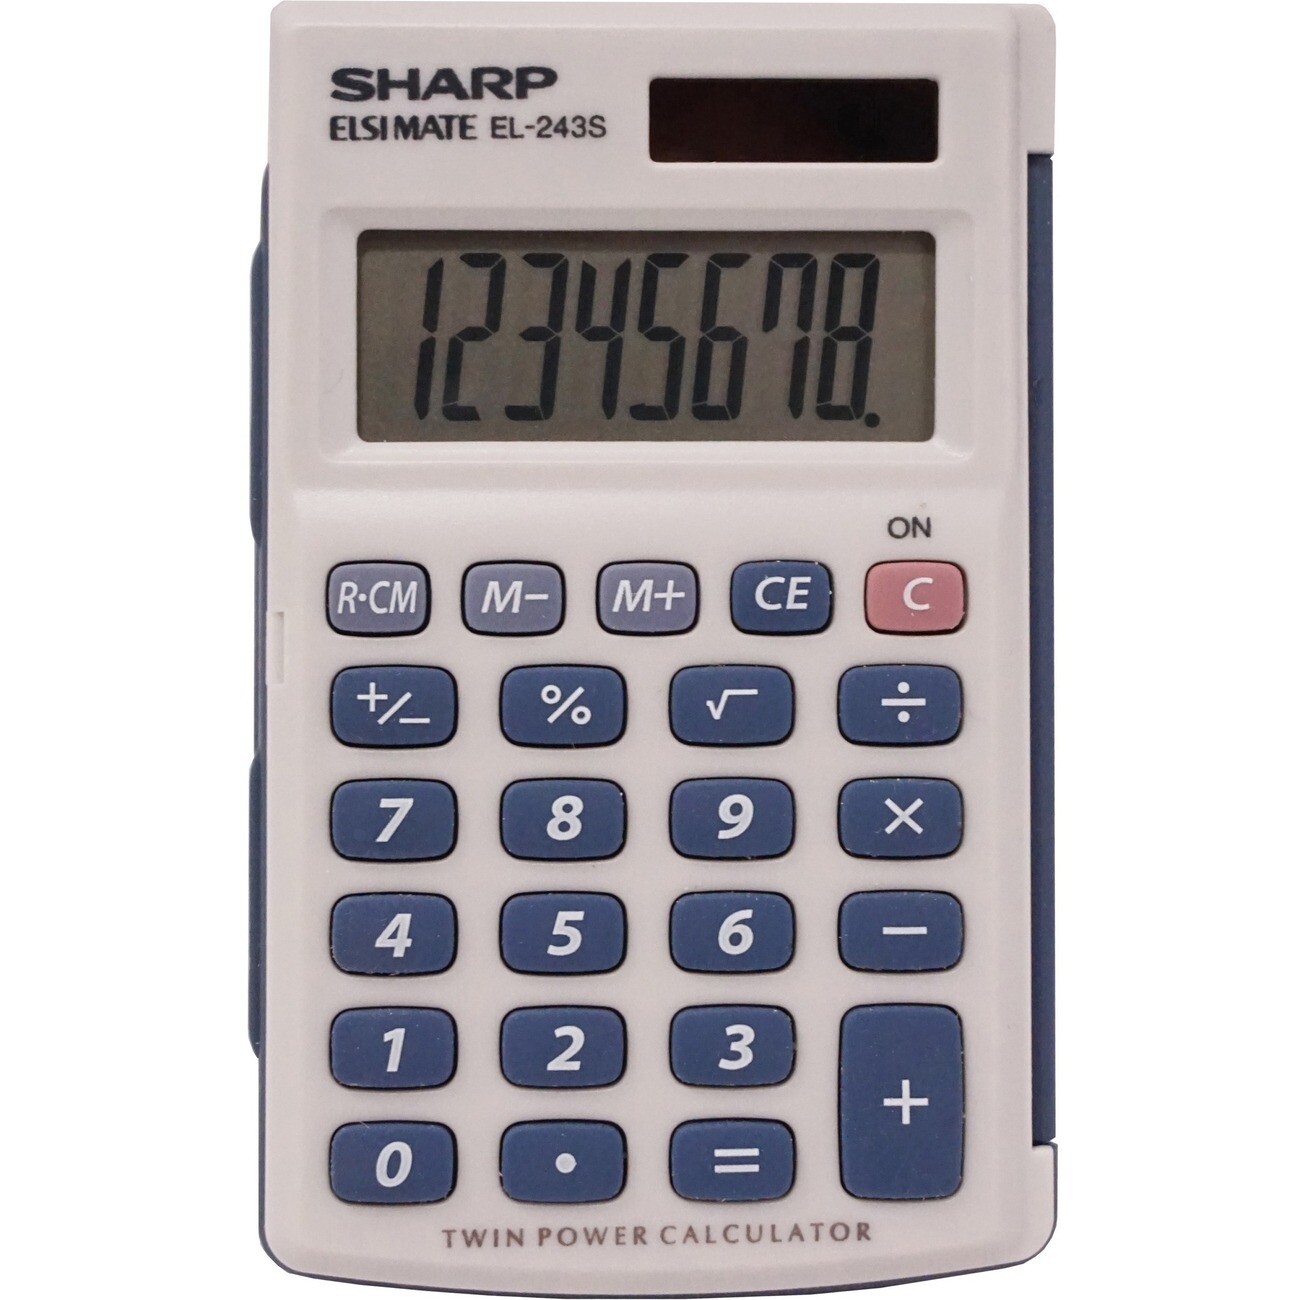 Calculator, Handheld 8 Digit, EL-243SB